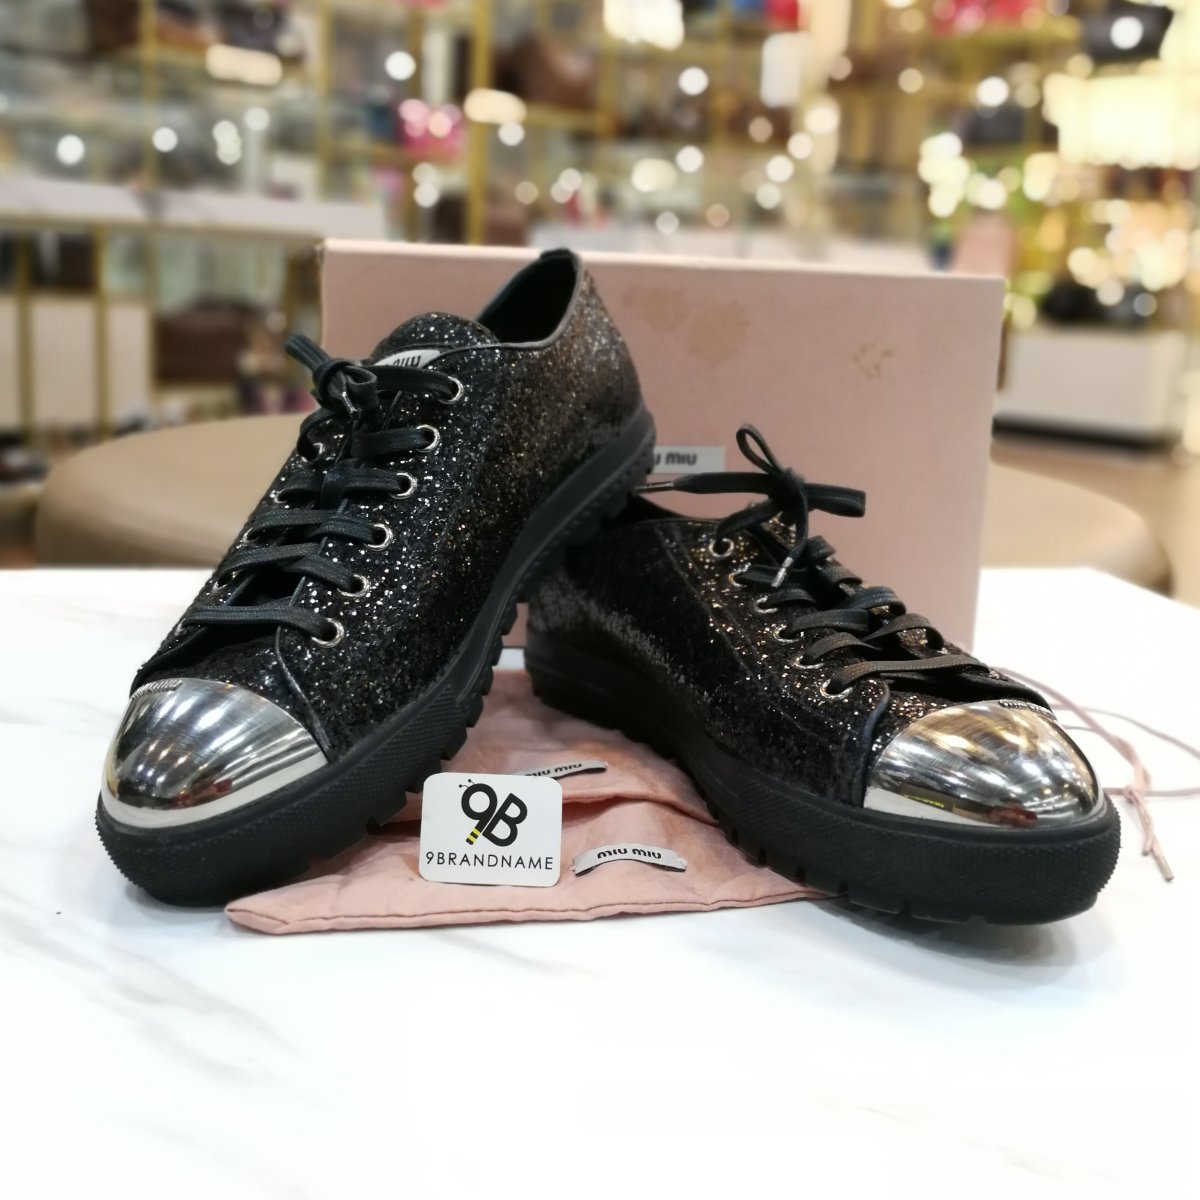 Used Like New - Miu Miu Shoes Sneakers Glitter Lux Nero Size 40 